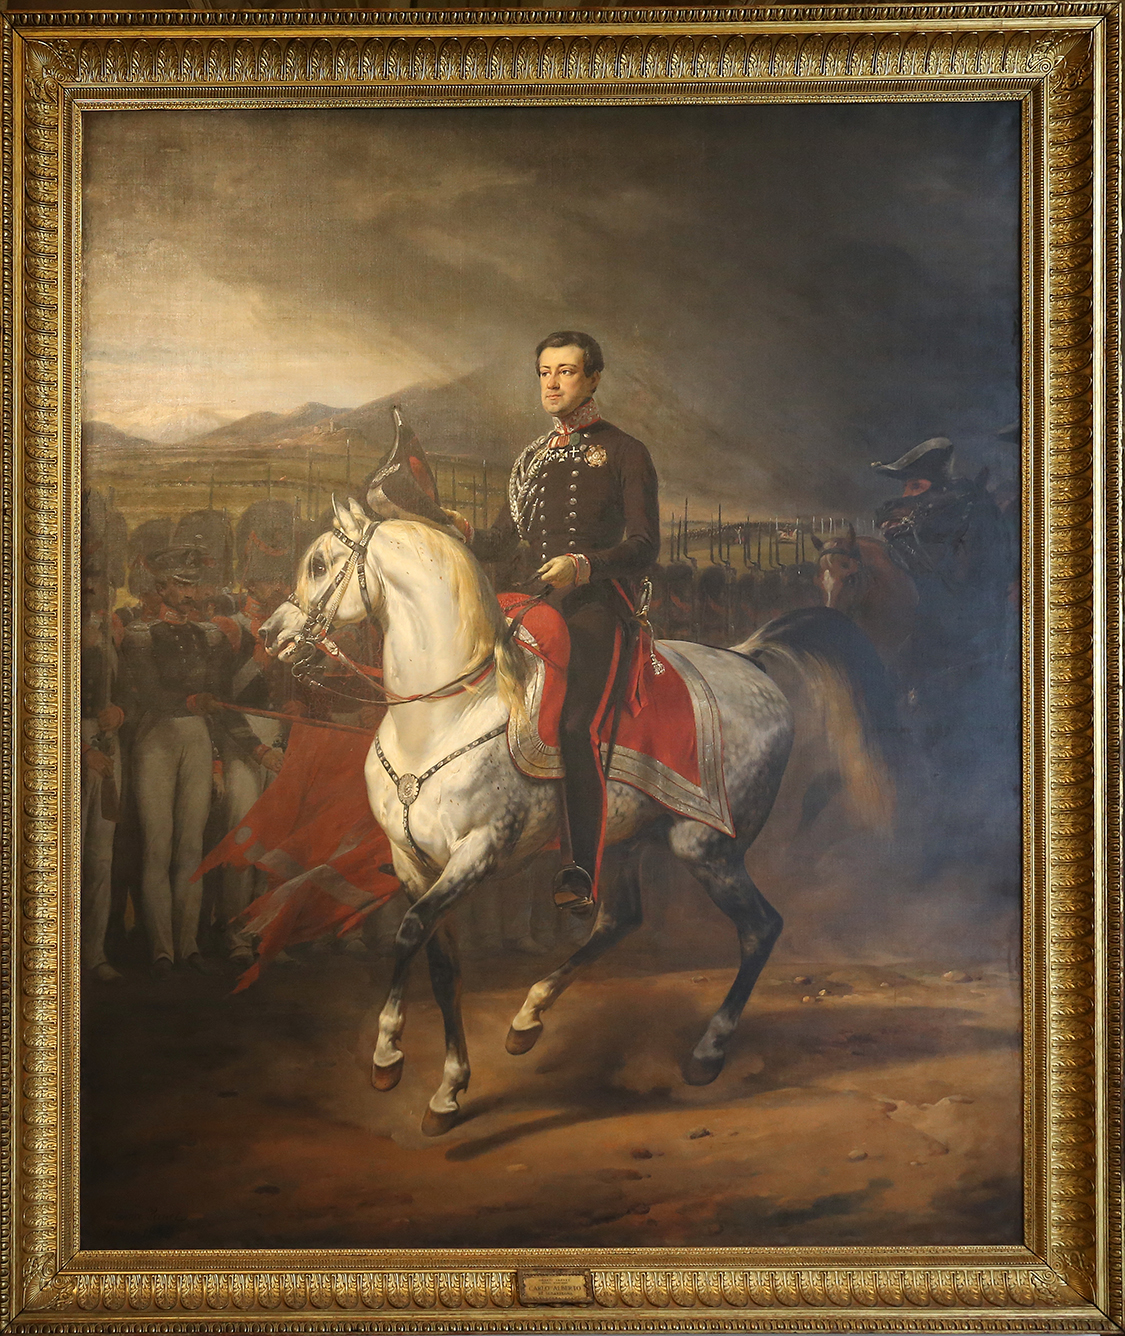 GalleriaSabauda_146.JPG - Horace Vernet  Parigi, 1789-1863  Ritratto equestre di Carlo Alberto, re di Sardegna